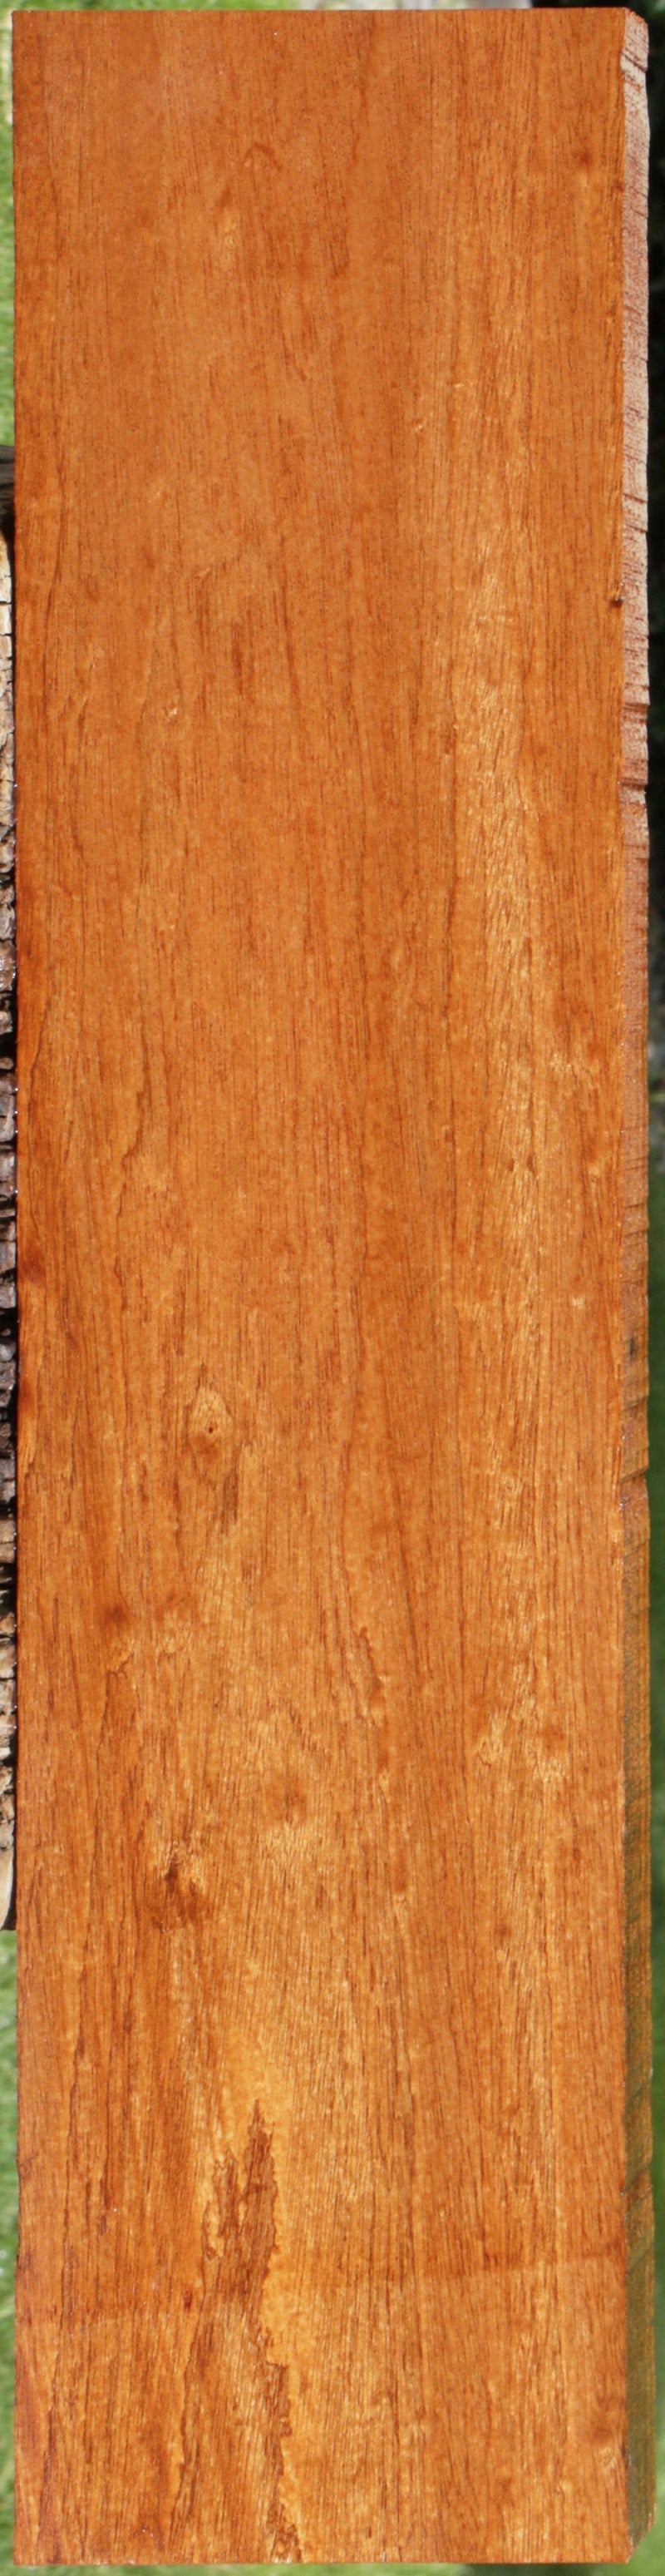 Sapele Lumber